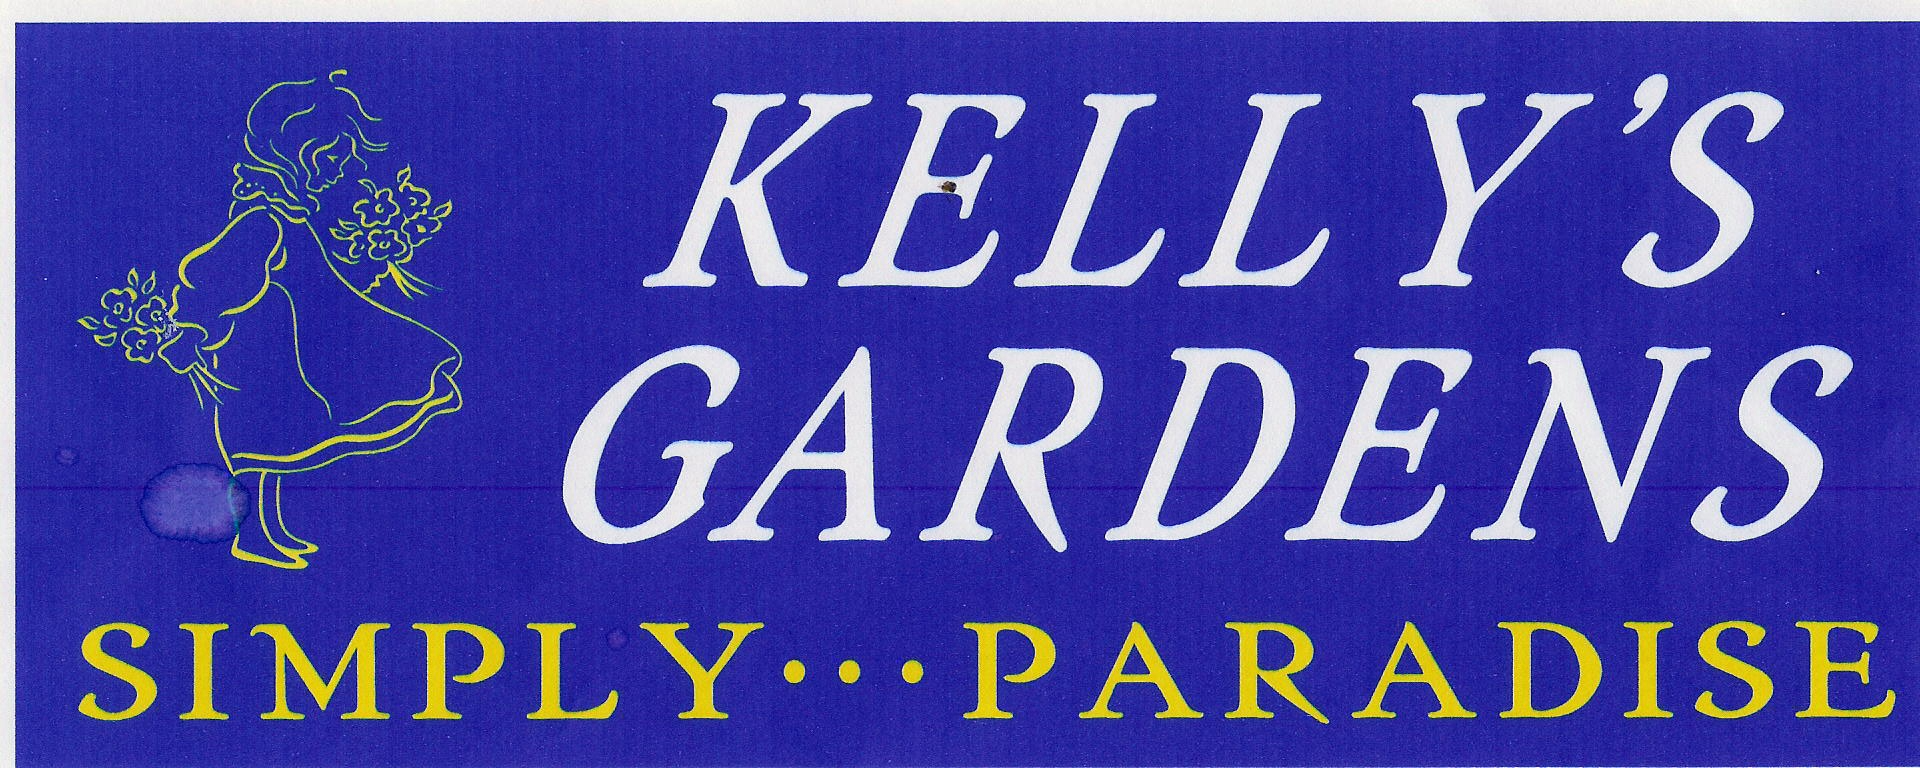 KG Kelly's Gardens